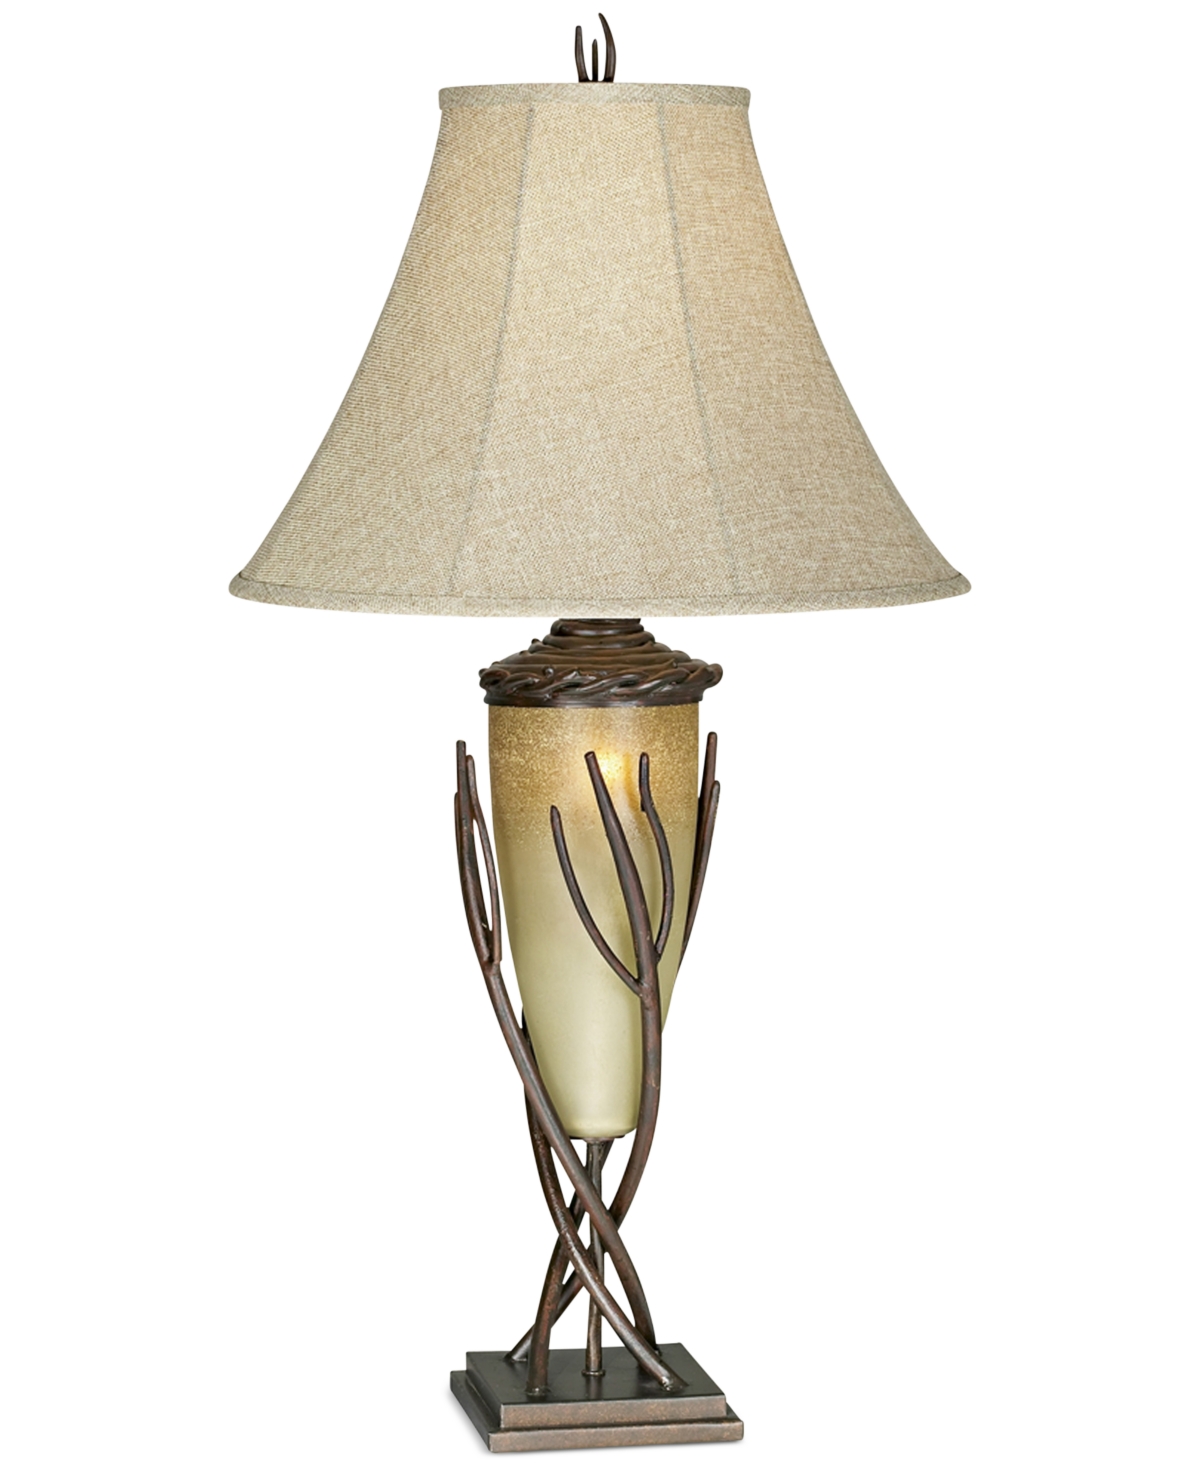 UPC 736101202431 product image for Pacific Coast El Dorado Table Lamp | upcitemdb.com